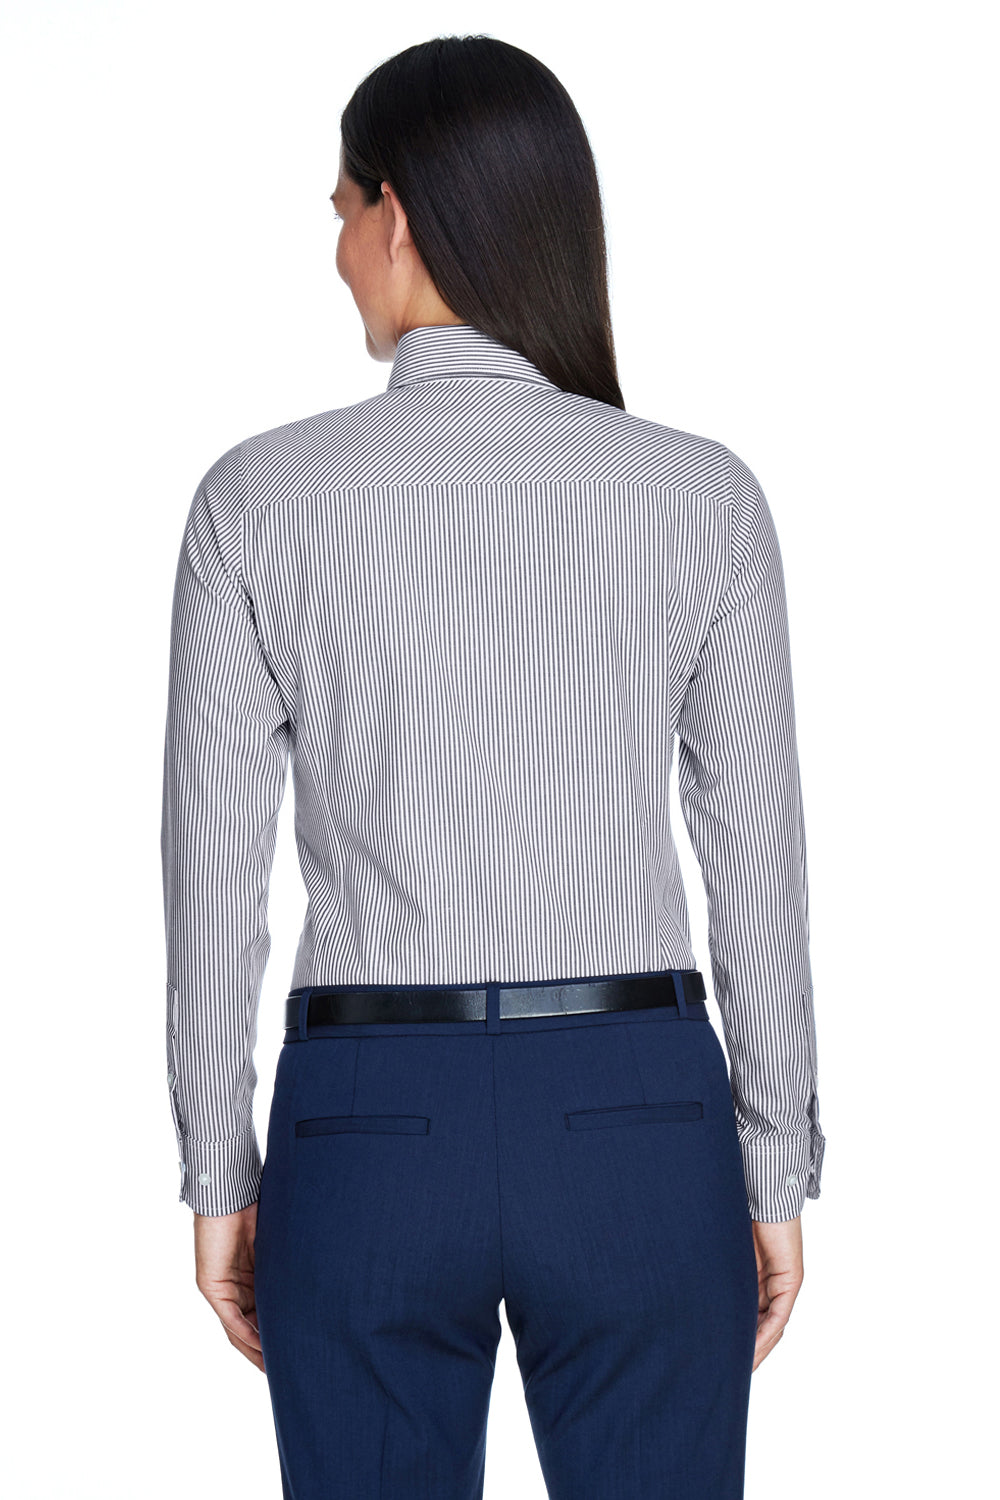 Devon & Jones D645W Womens Crown Woven Collection Wrinkle Resistant Long Sleeve Button Down Shirt Navy Blue Back